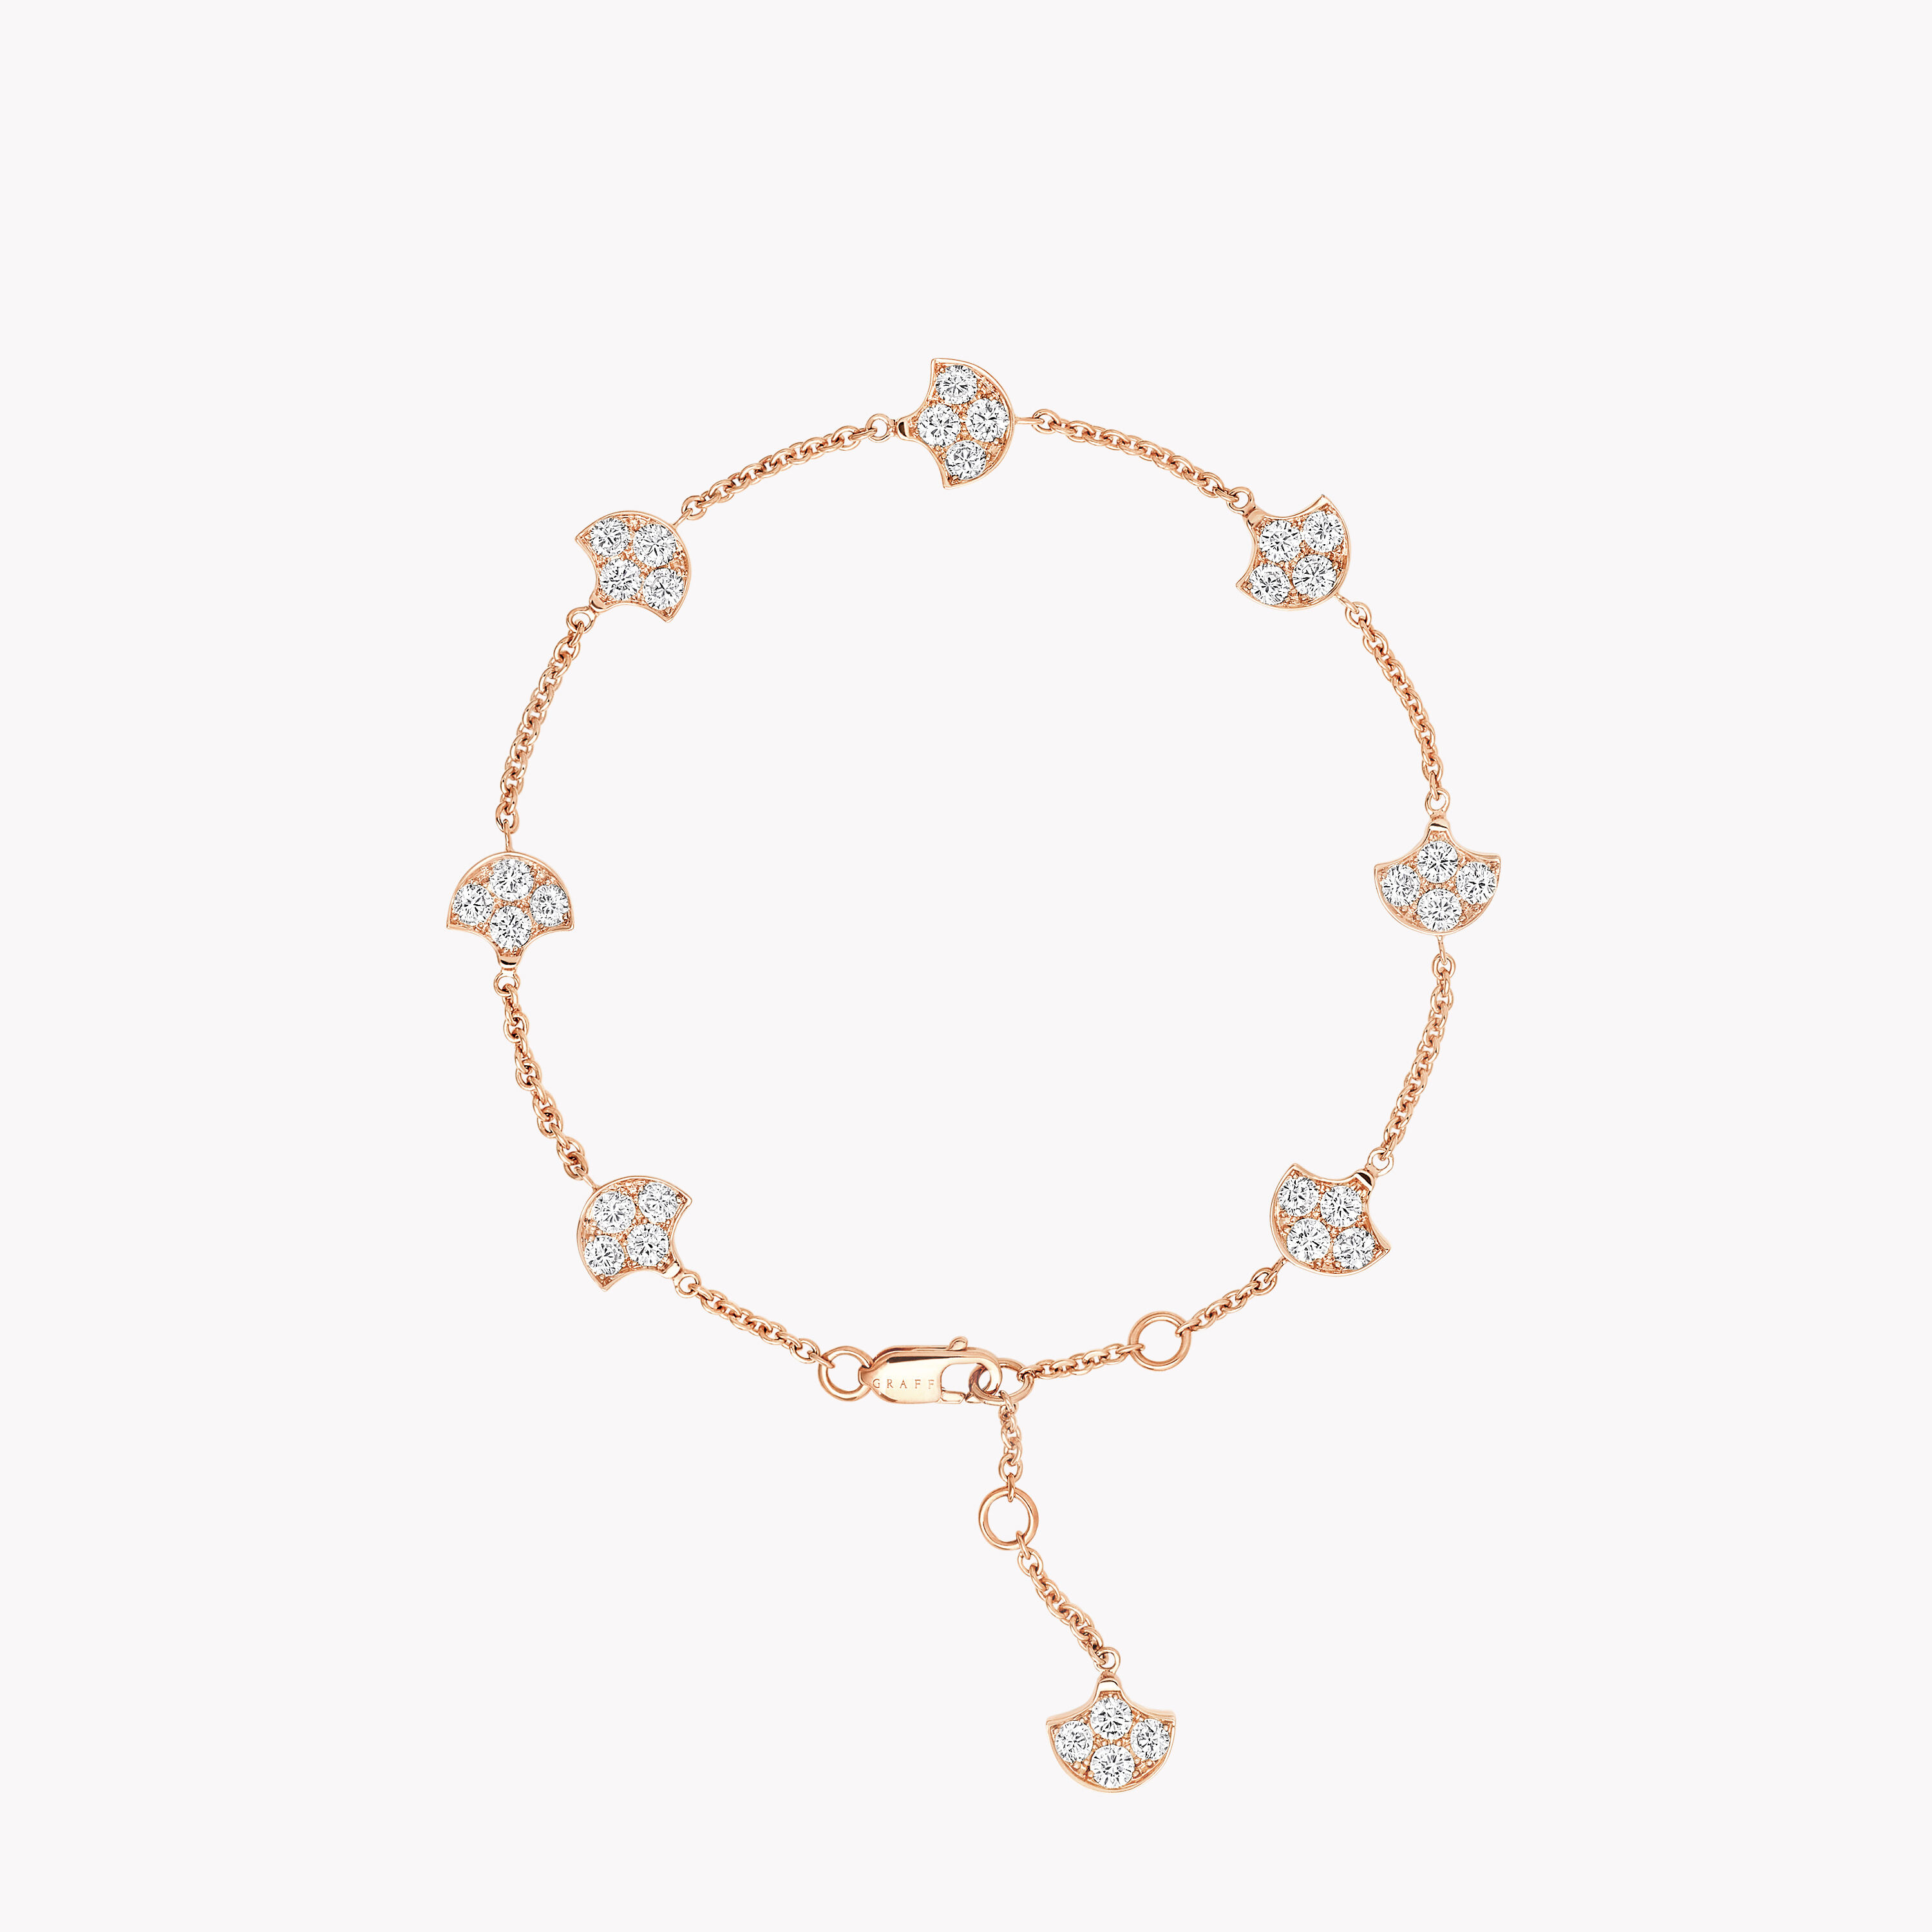 elegant and beautiful gold bracelet design ideas for girls - YouTube